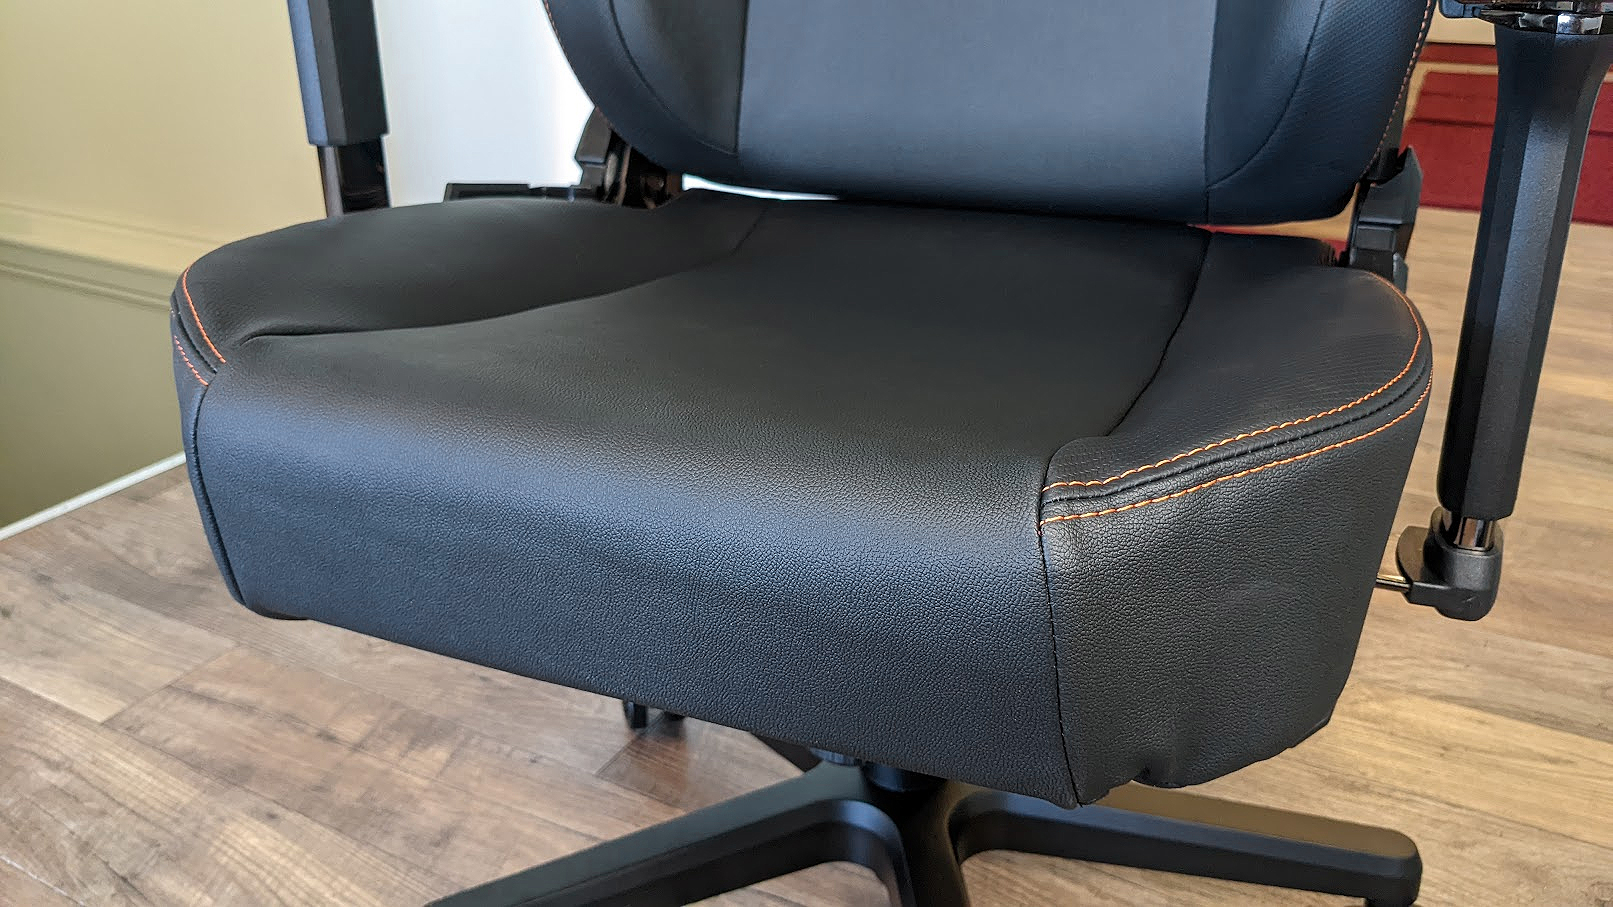 Anda Seat Kaiser 3 Gaming Chair Seat Cushion Texture